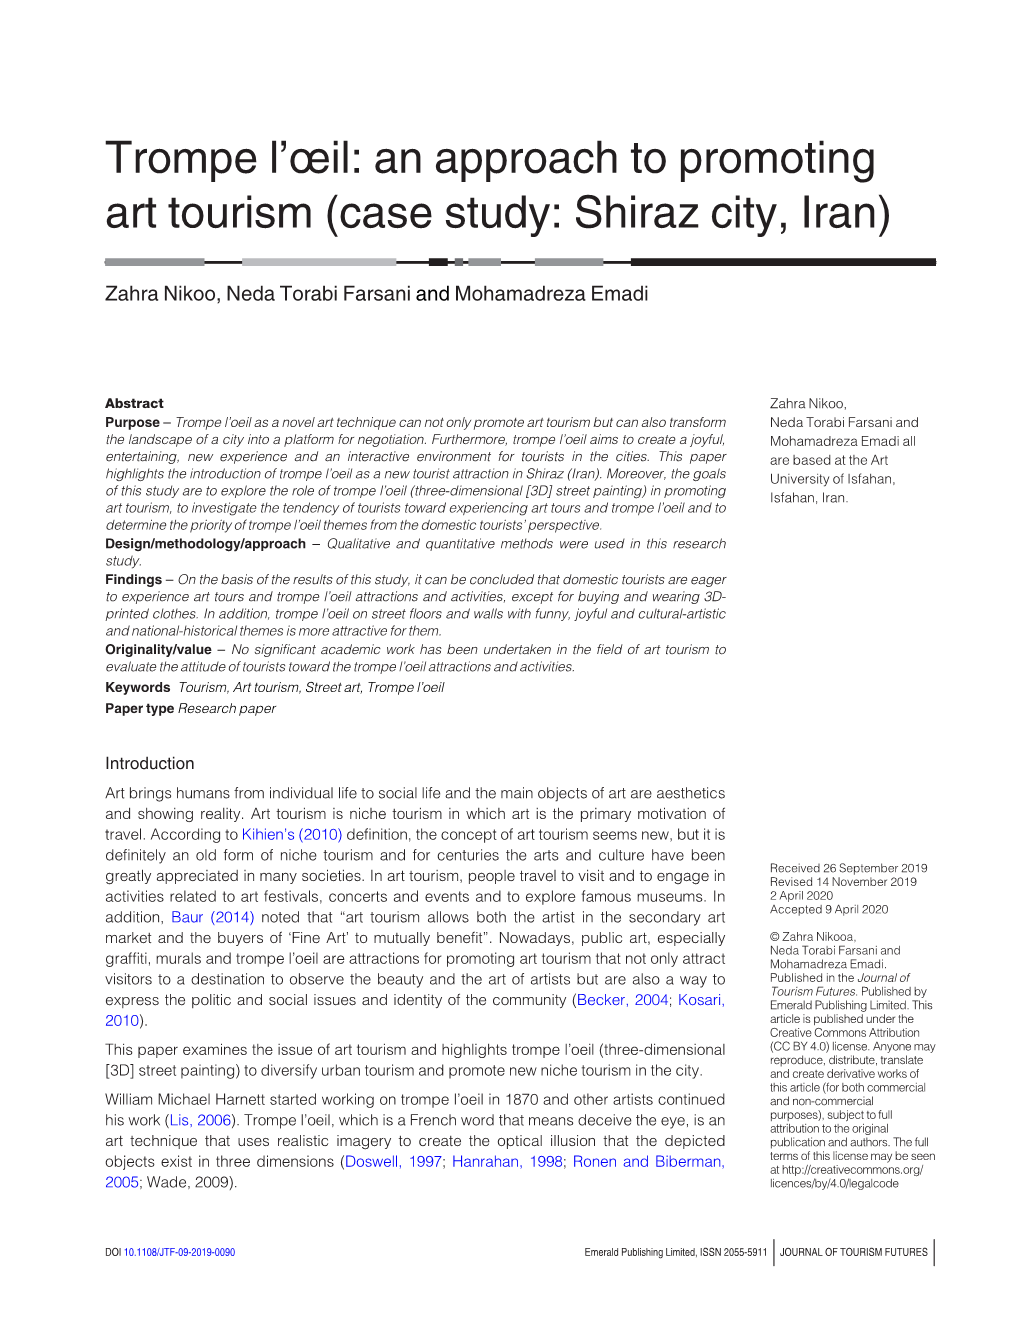 Trompe L'œil: an Approach to Promoting Art Tourism (Case Study: Shiraz City, Iran)